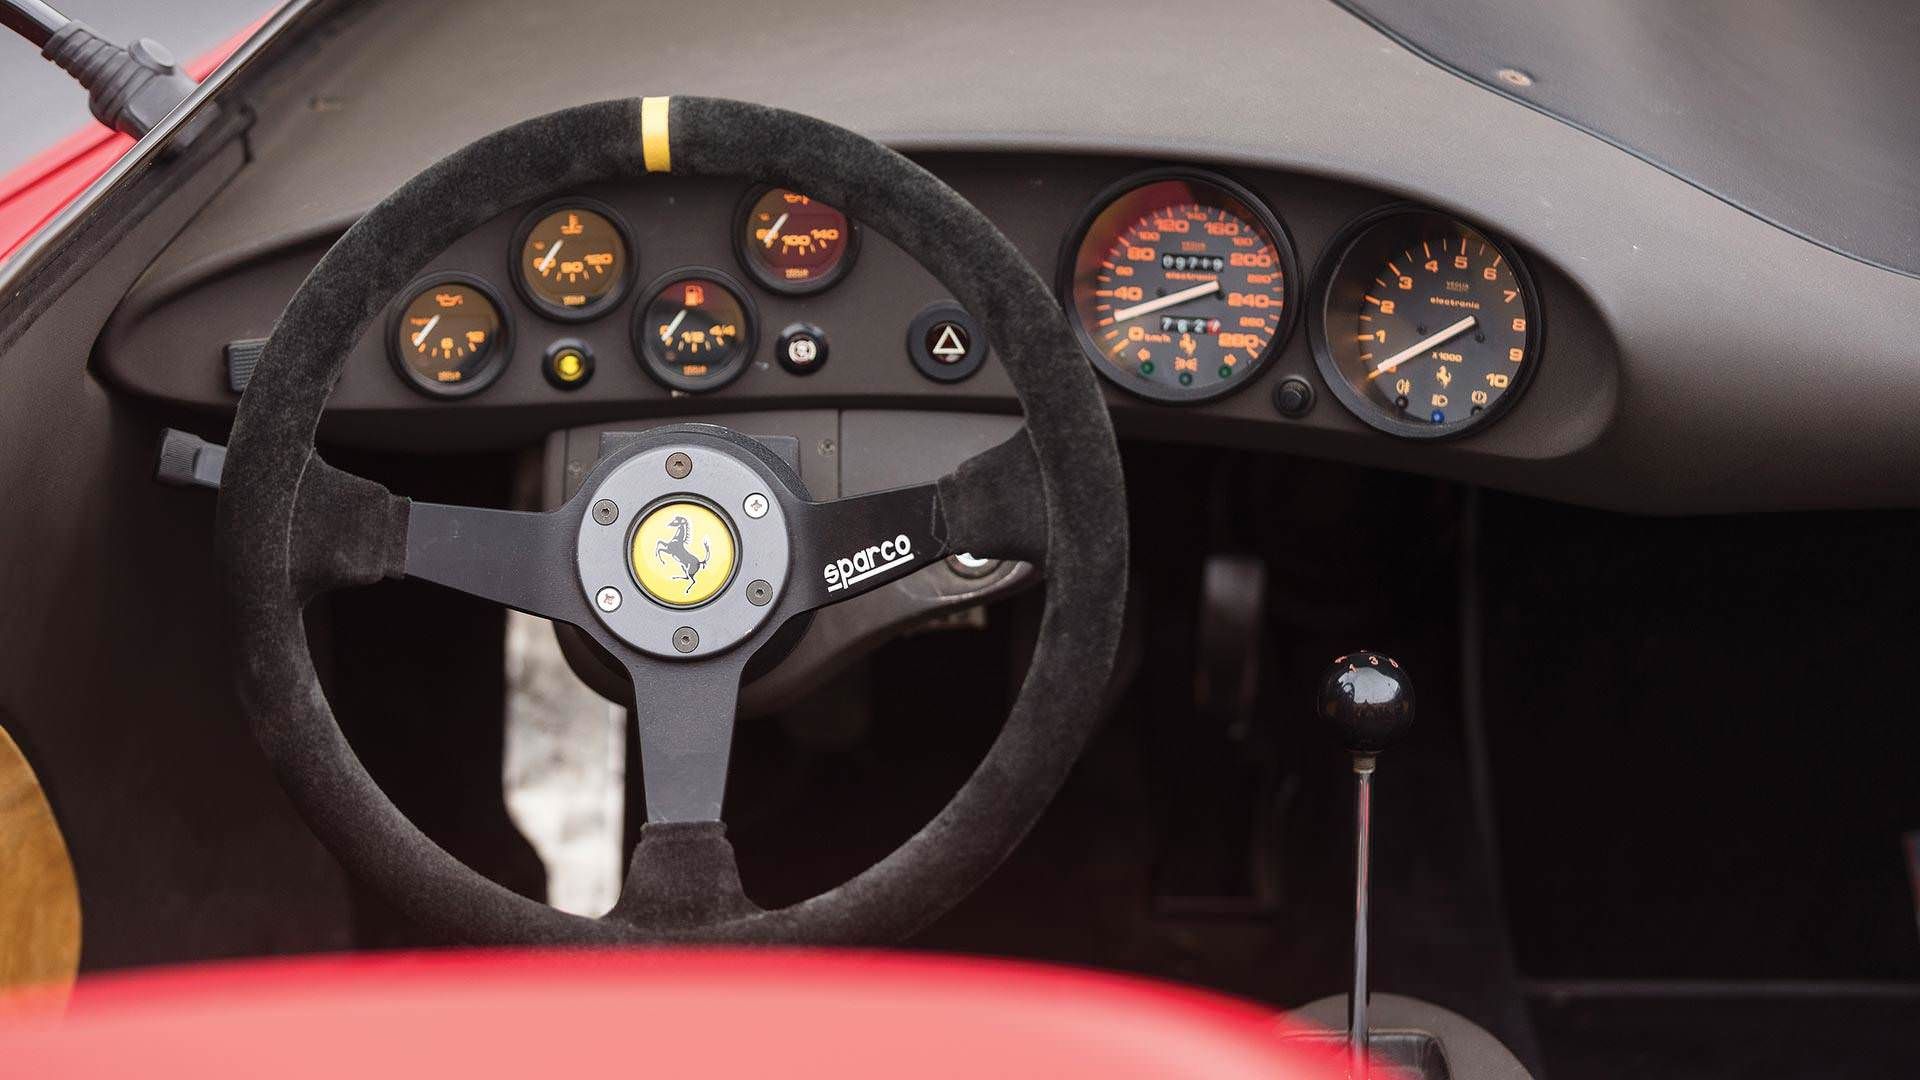 Ferrari 328 GTS Conciso / رودستر مفهومی کونسیسو براساس فراری 328 GTS